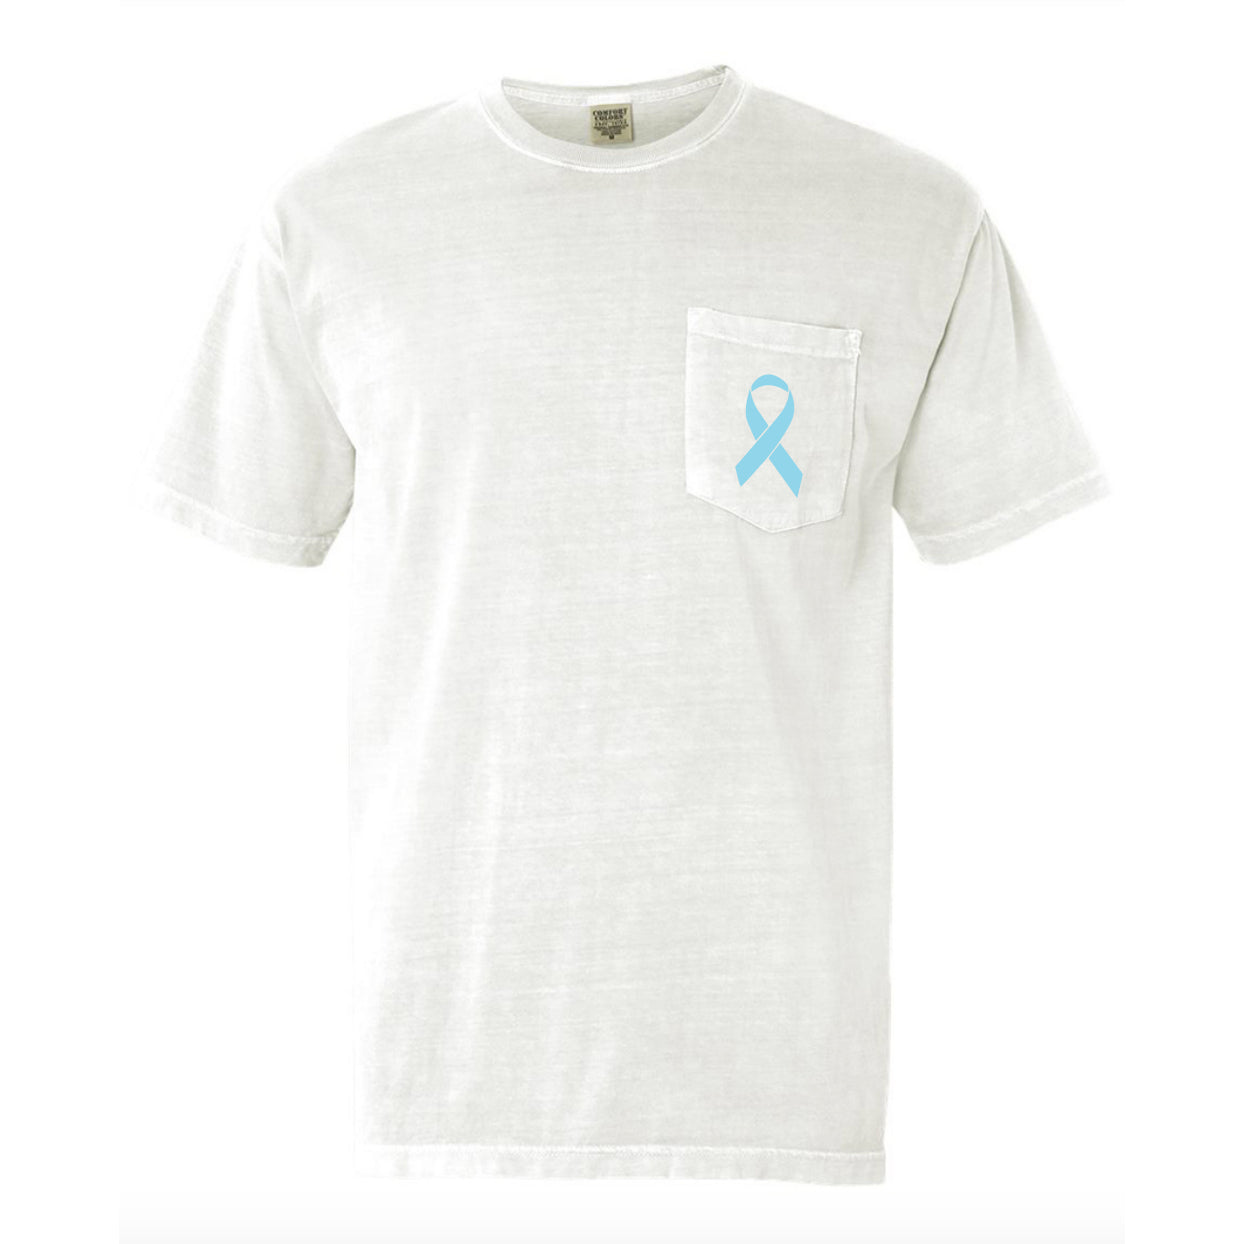 Up Cancer White Ribbon Shirt (Listing ID: 6582543548485)